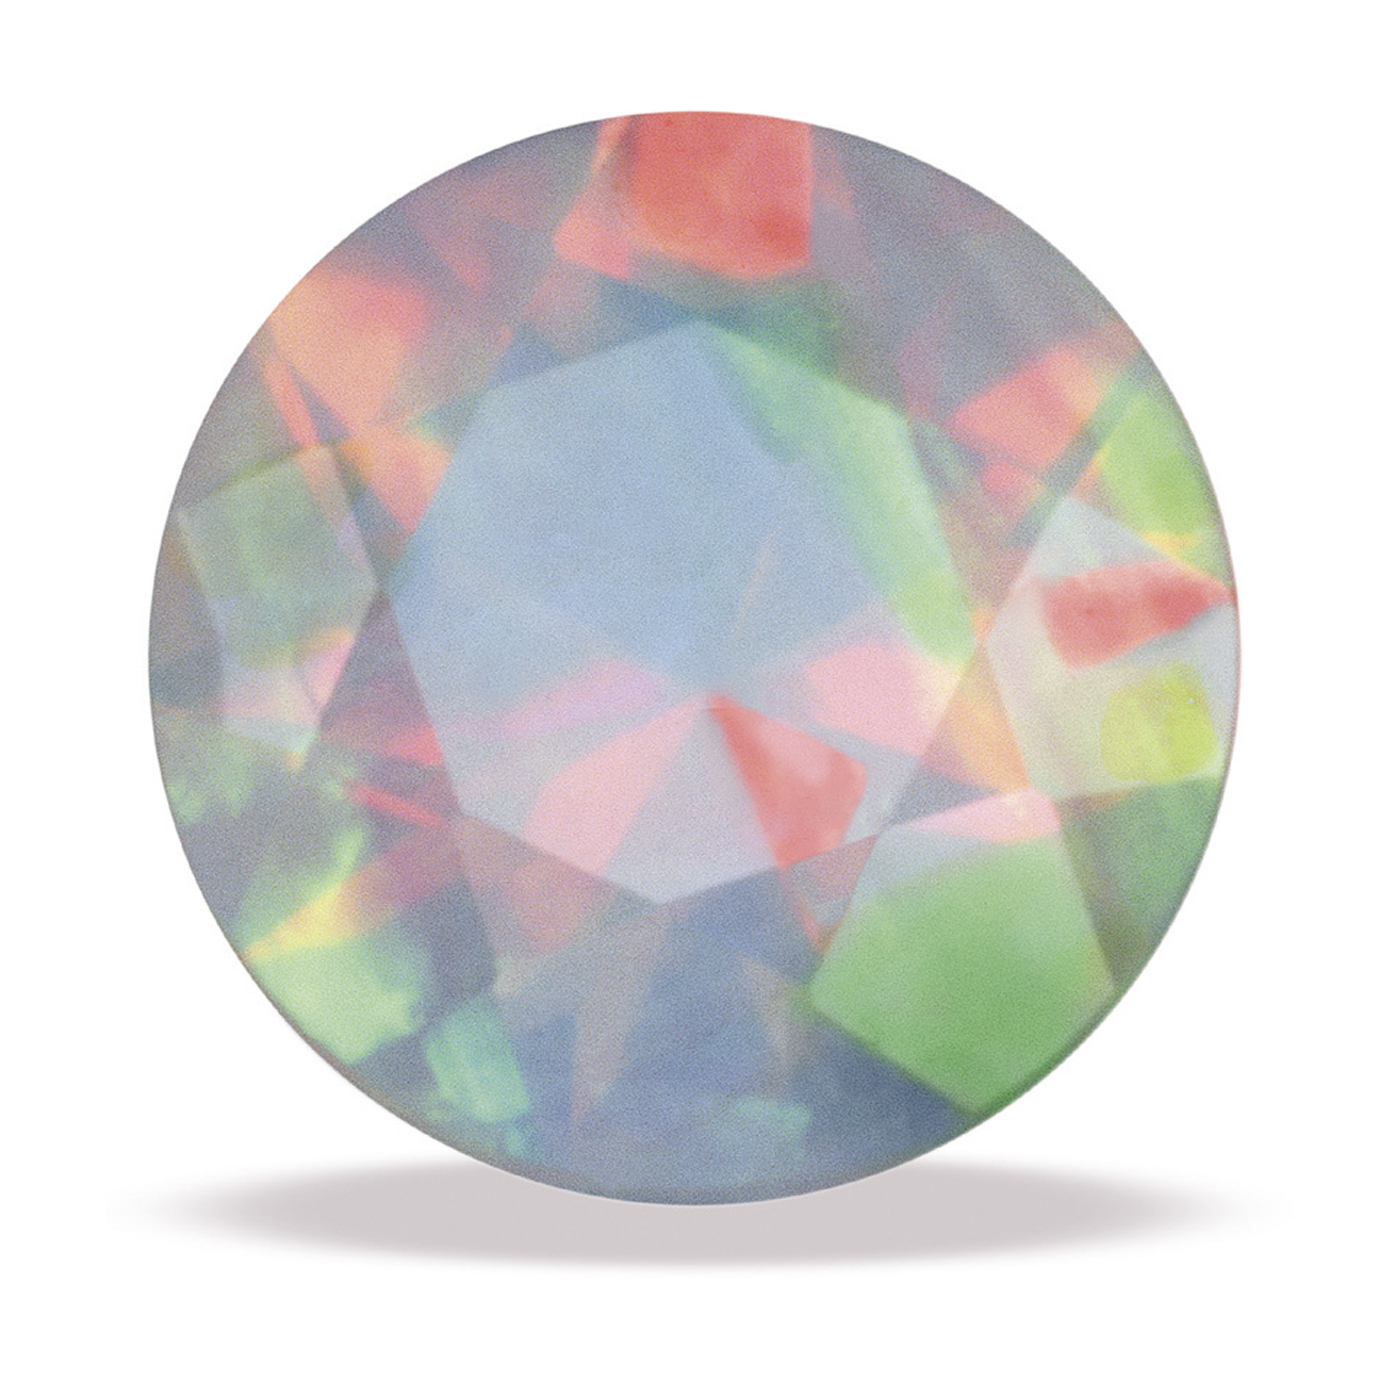 Synhetic Opal, White, 3.0, Brilliant Cut - 1 piece